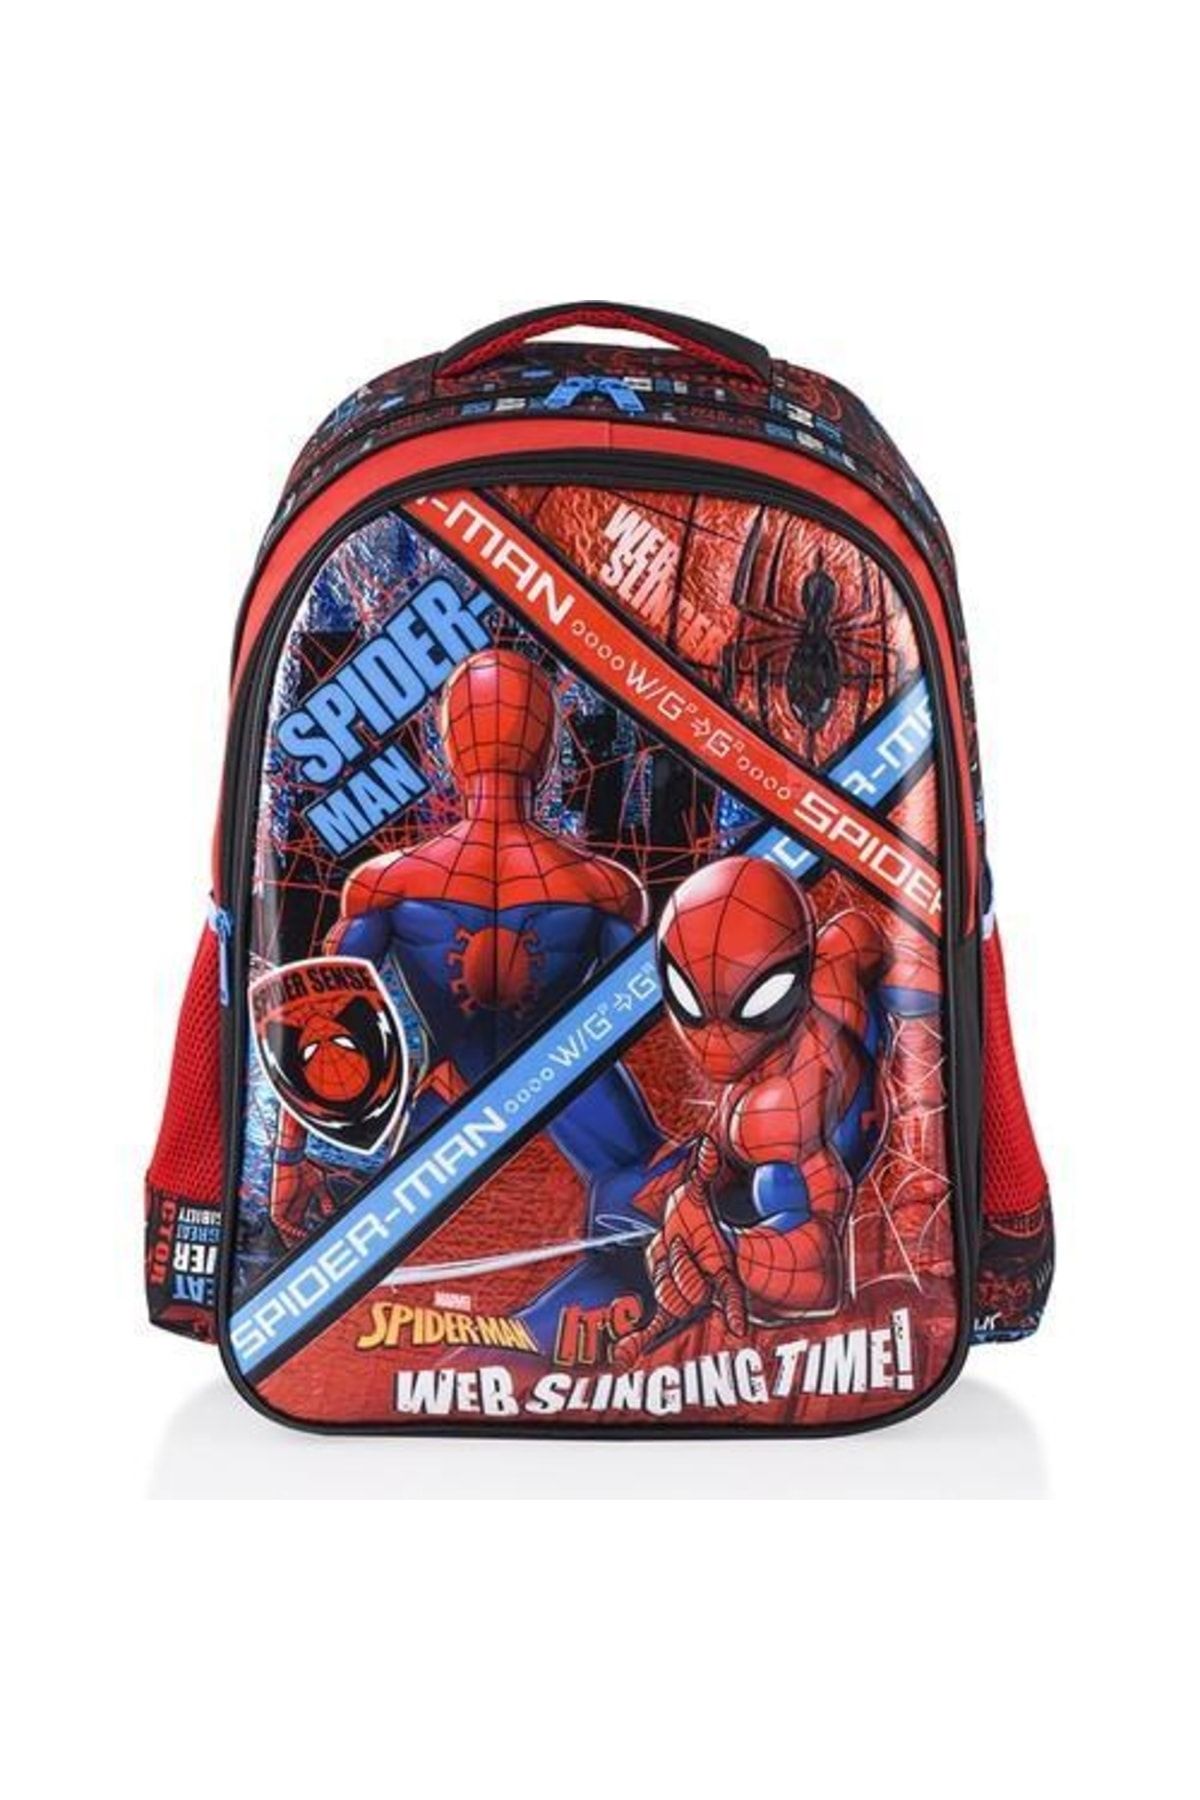 Spiderman Salto Ilkokul Çantası Web Slinging Time Otto 41299